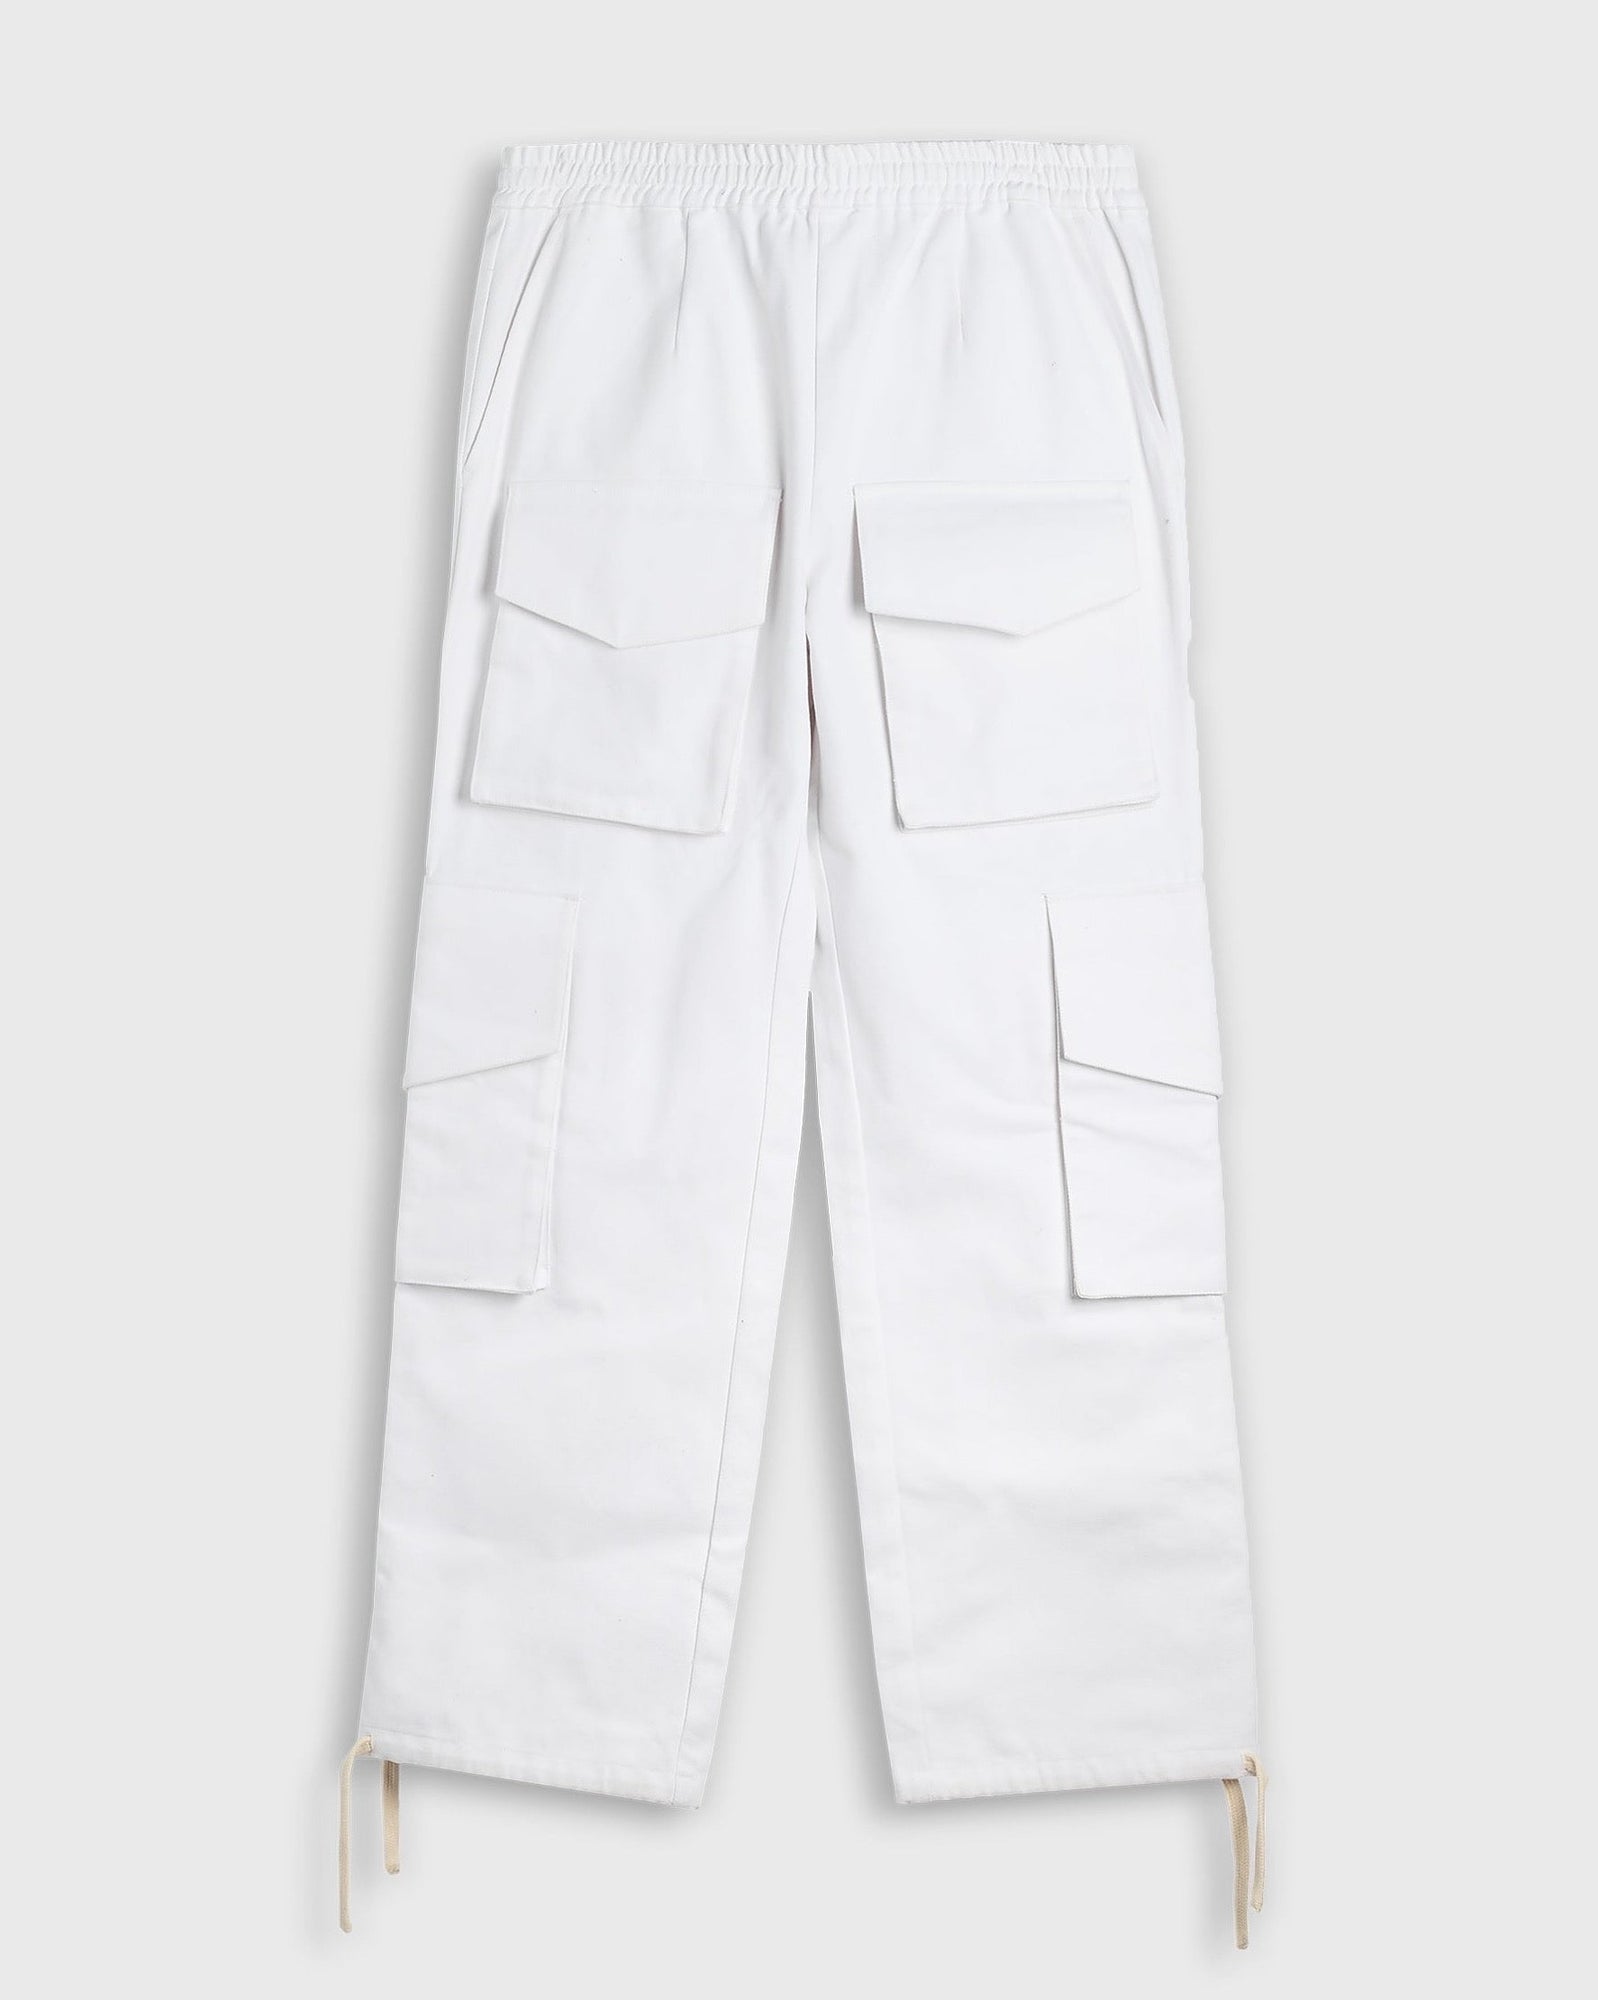 White cargo pant- unisex fashion bottoms for men & women by Krost.